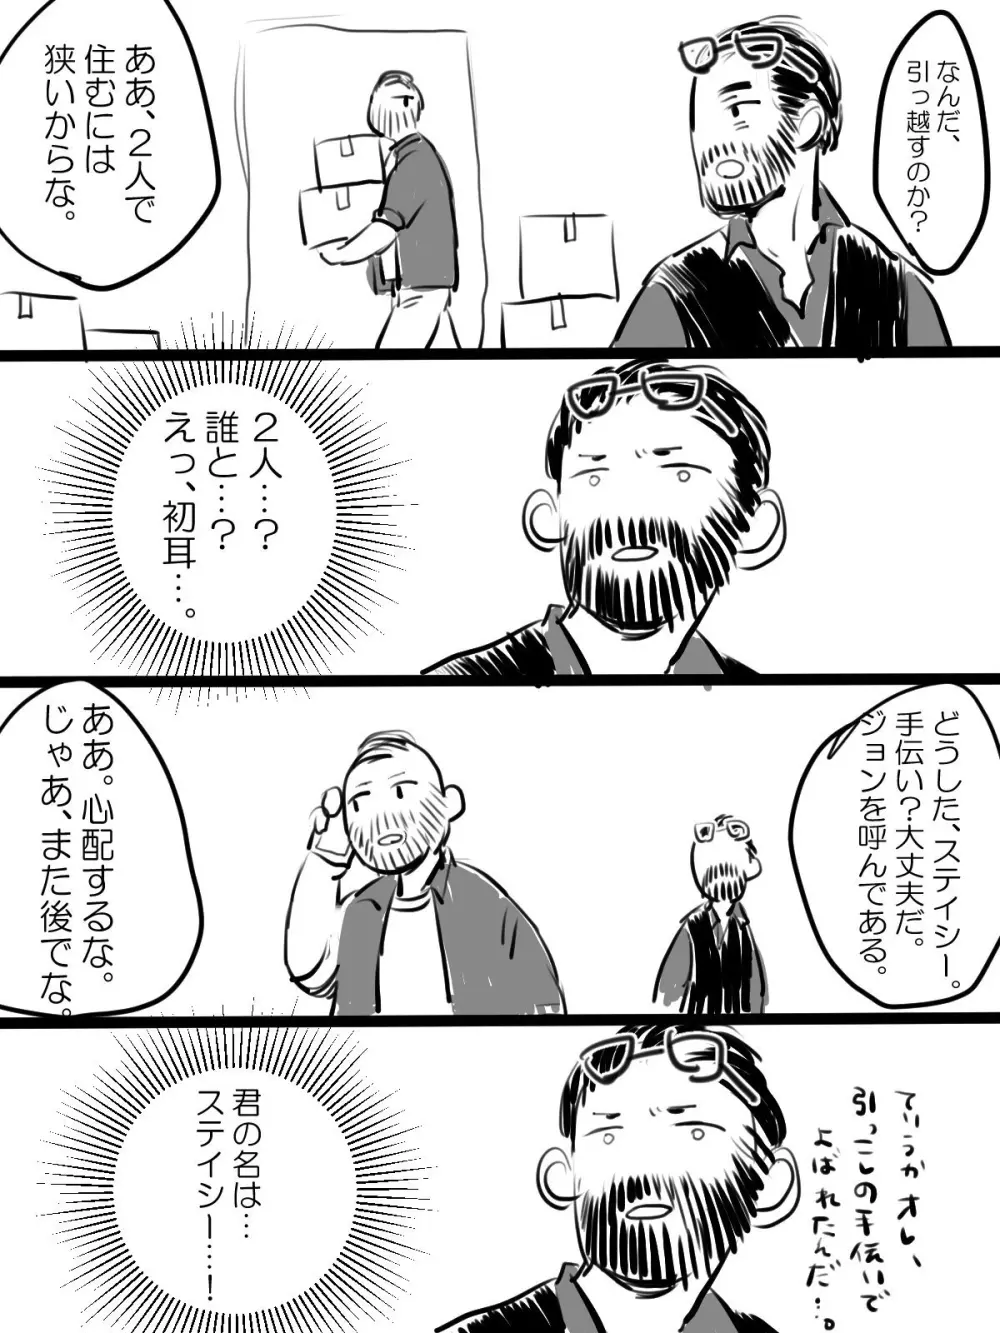 【FC5】ジェイプラログまとめ2 6ページ